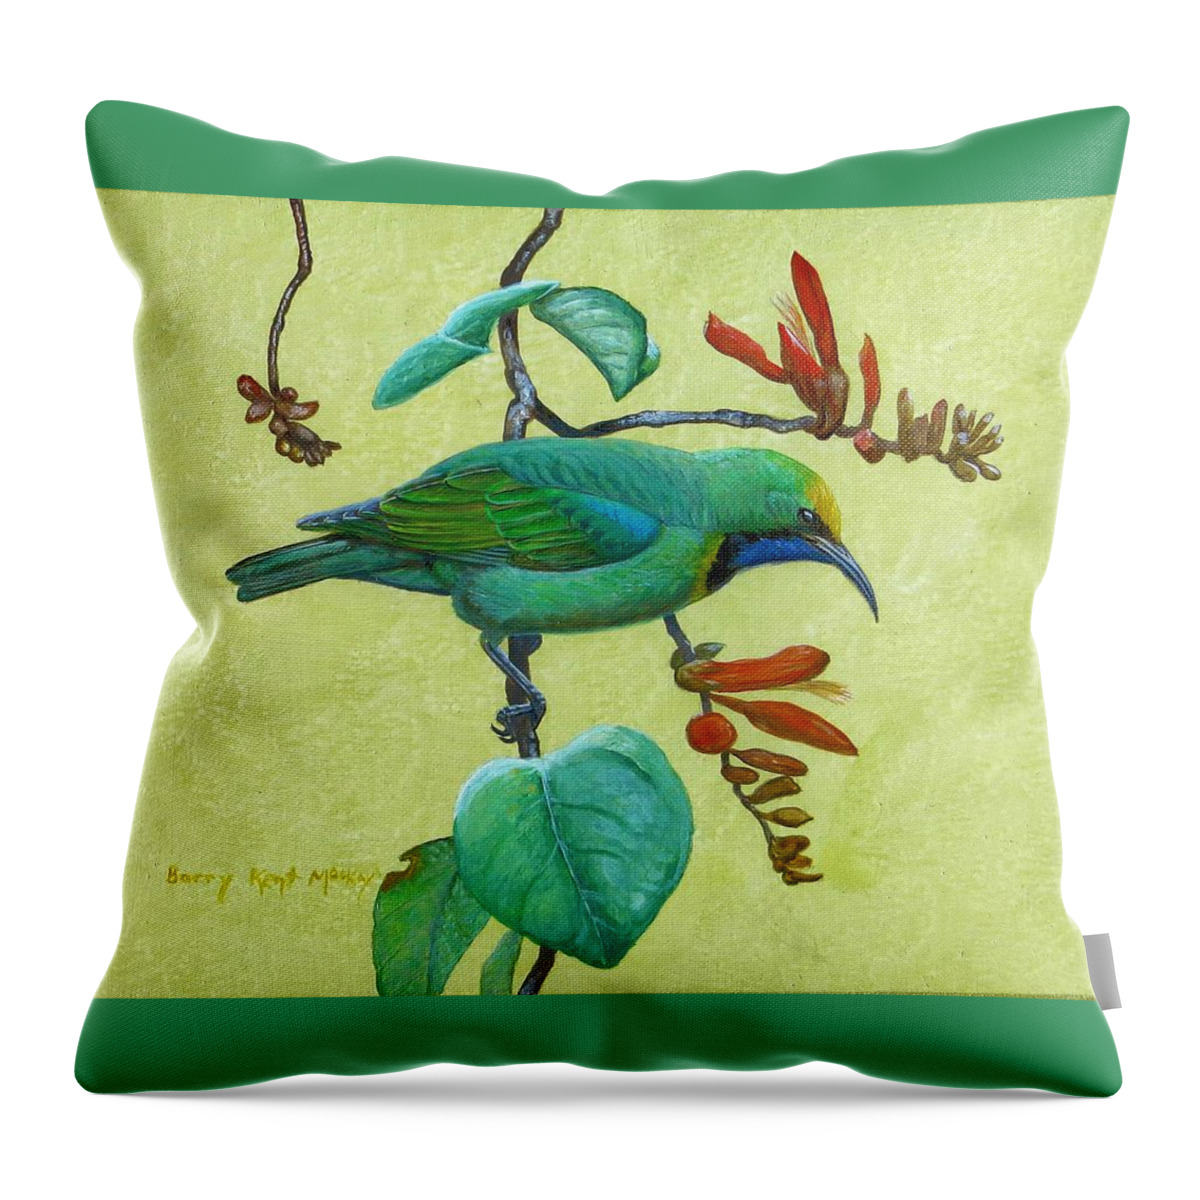 Golden-fronted Leafbird Throw Pillow featuring the painting Golden-fronted Leafbird by Barry Kent MacKay